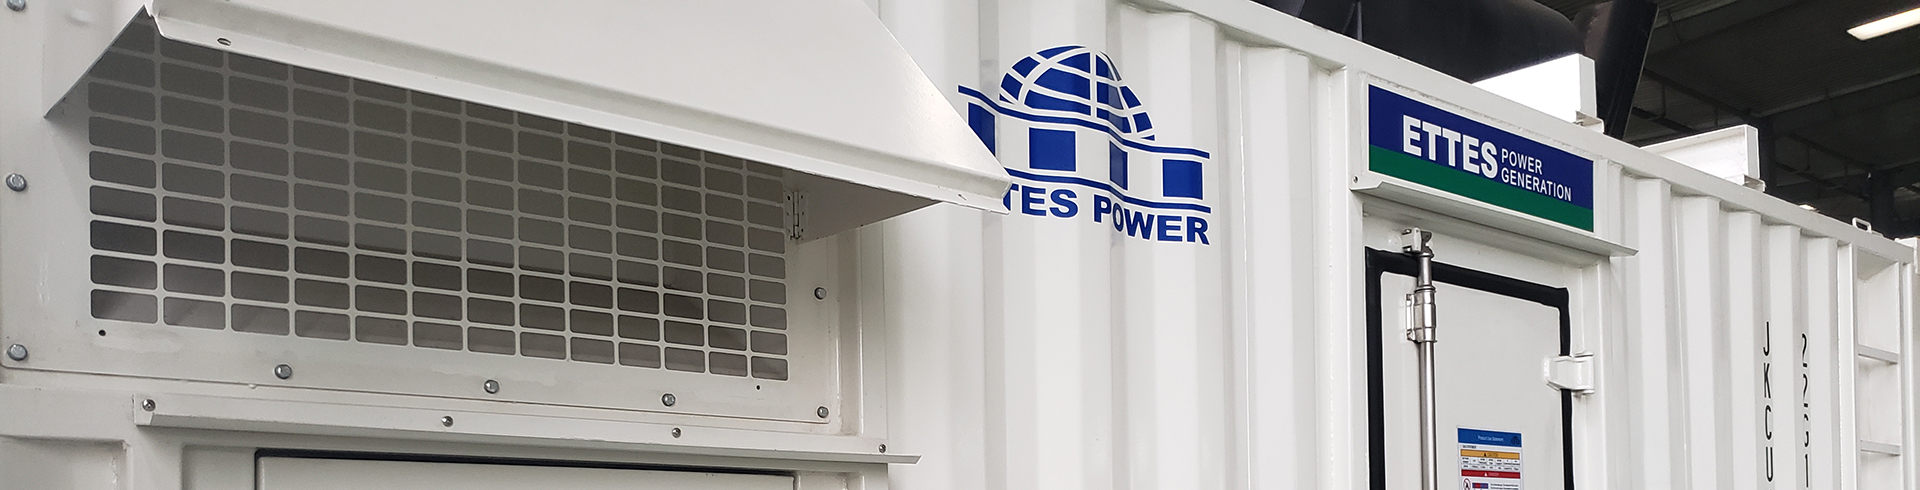 Ettespower manufature producer gas engine generators & CHPs Ettes Power Group Cummins MAN MWM (16)